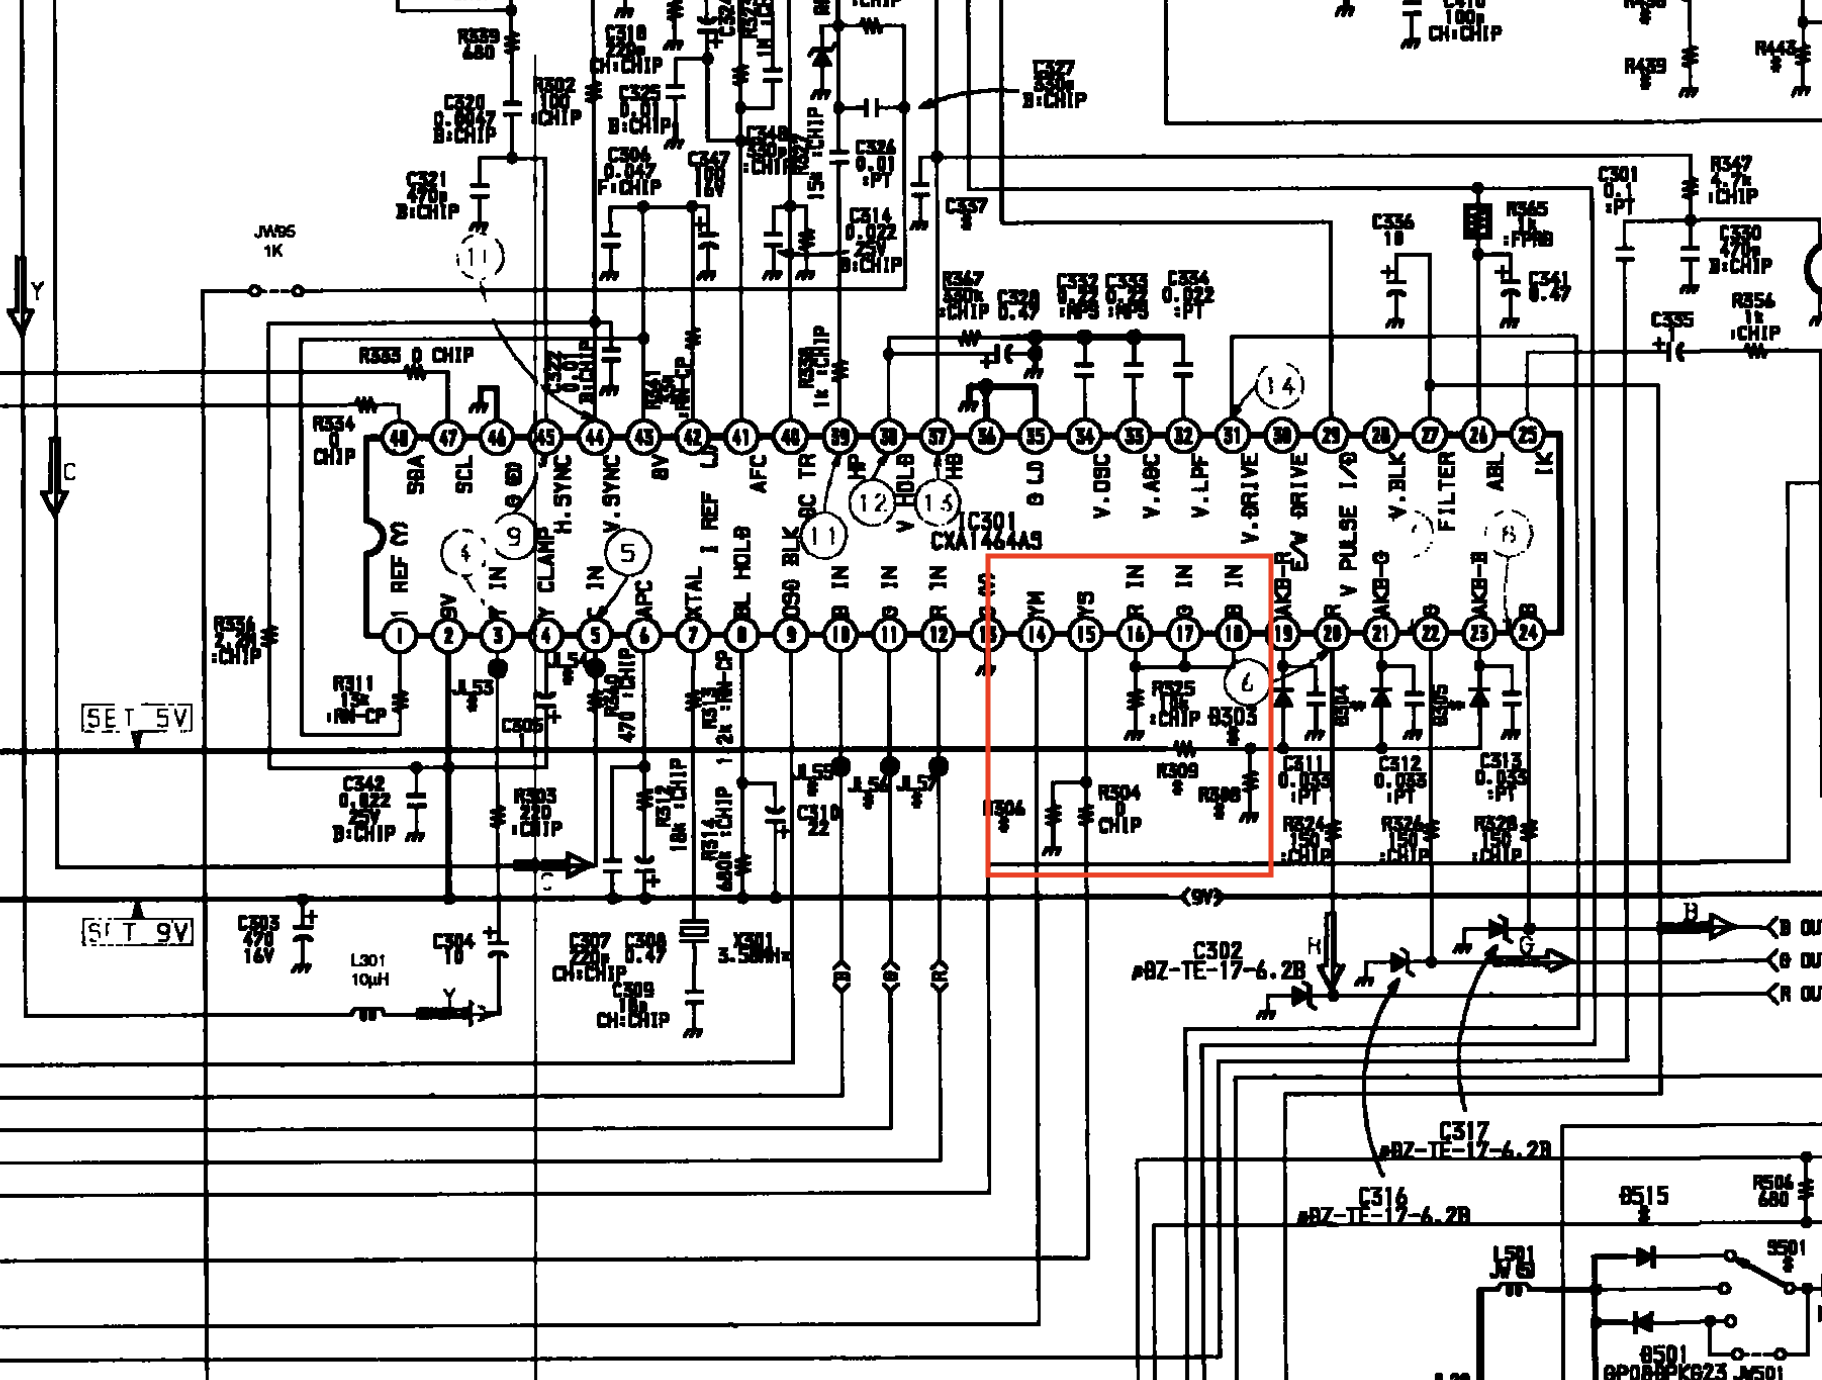 Sony BN-1 service manual schematics